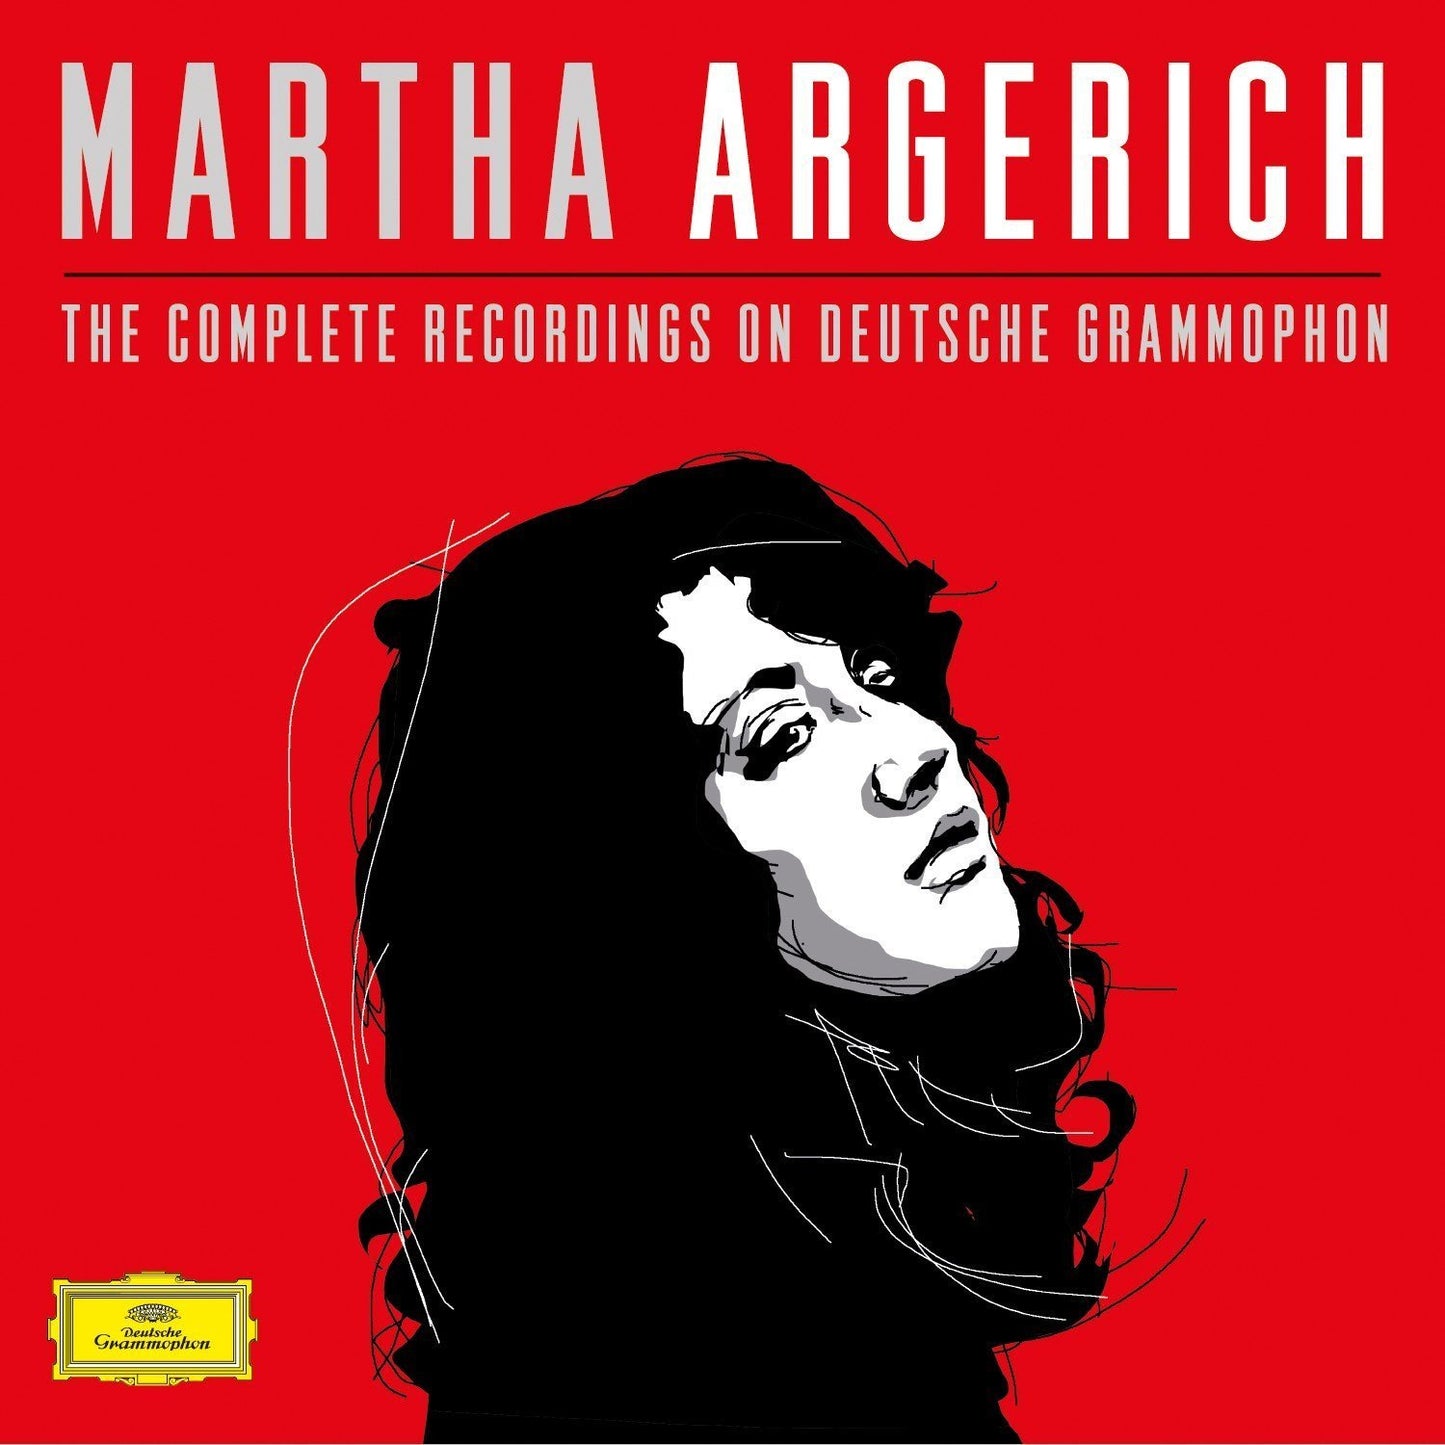 MARTHA ARGERICH - THE COMPLETE RECORDINGS ON DEUTSCHE GRAMMOPHON